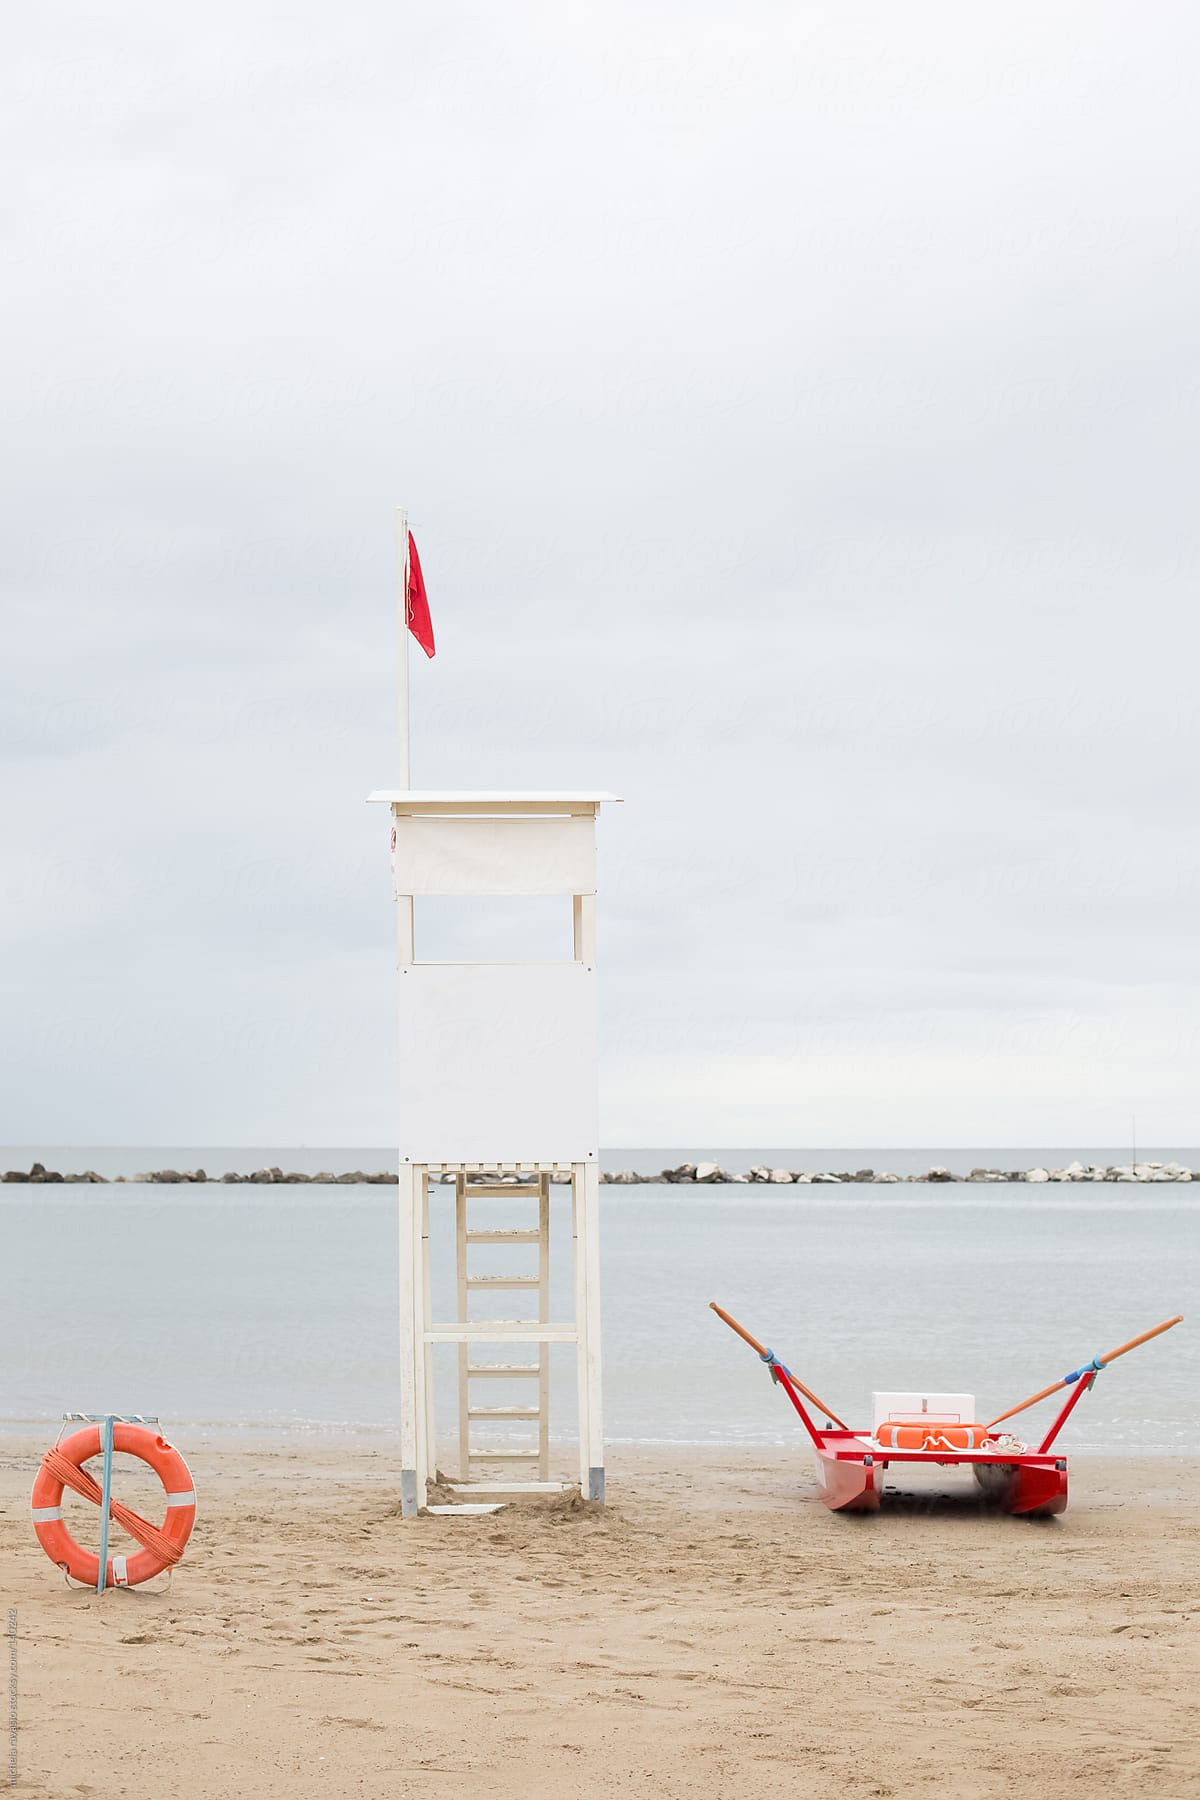 Lifeguard tower along the sea